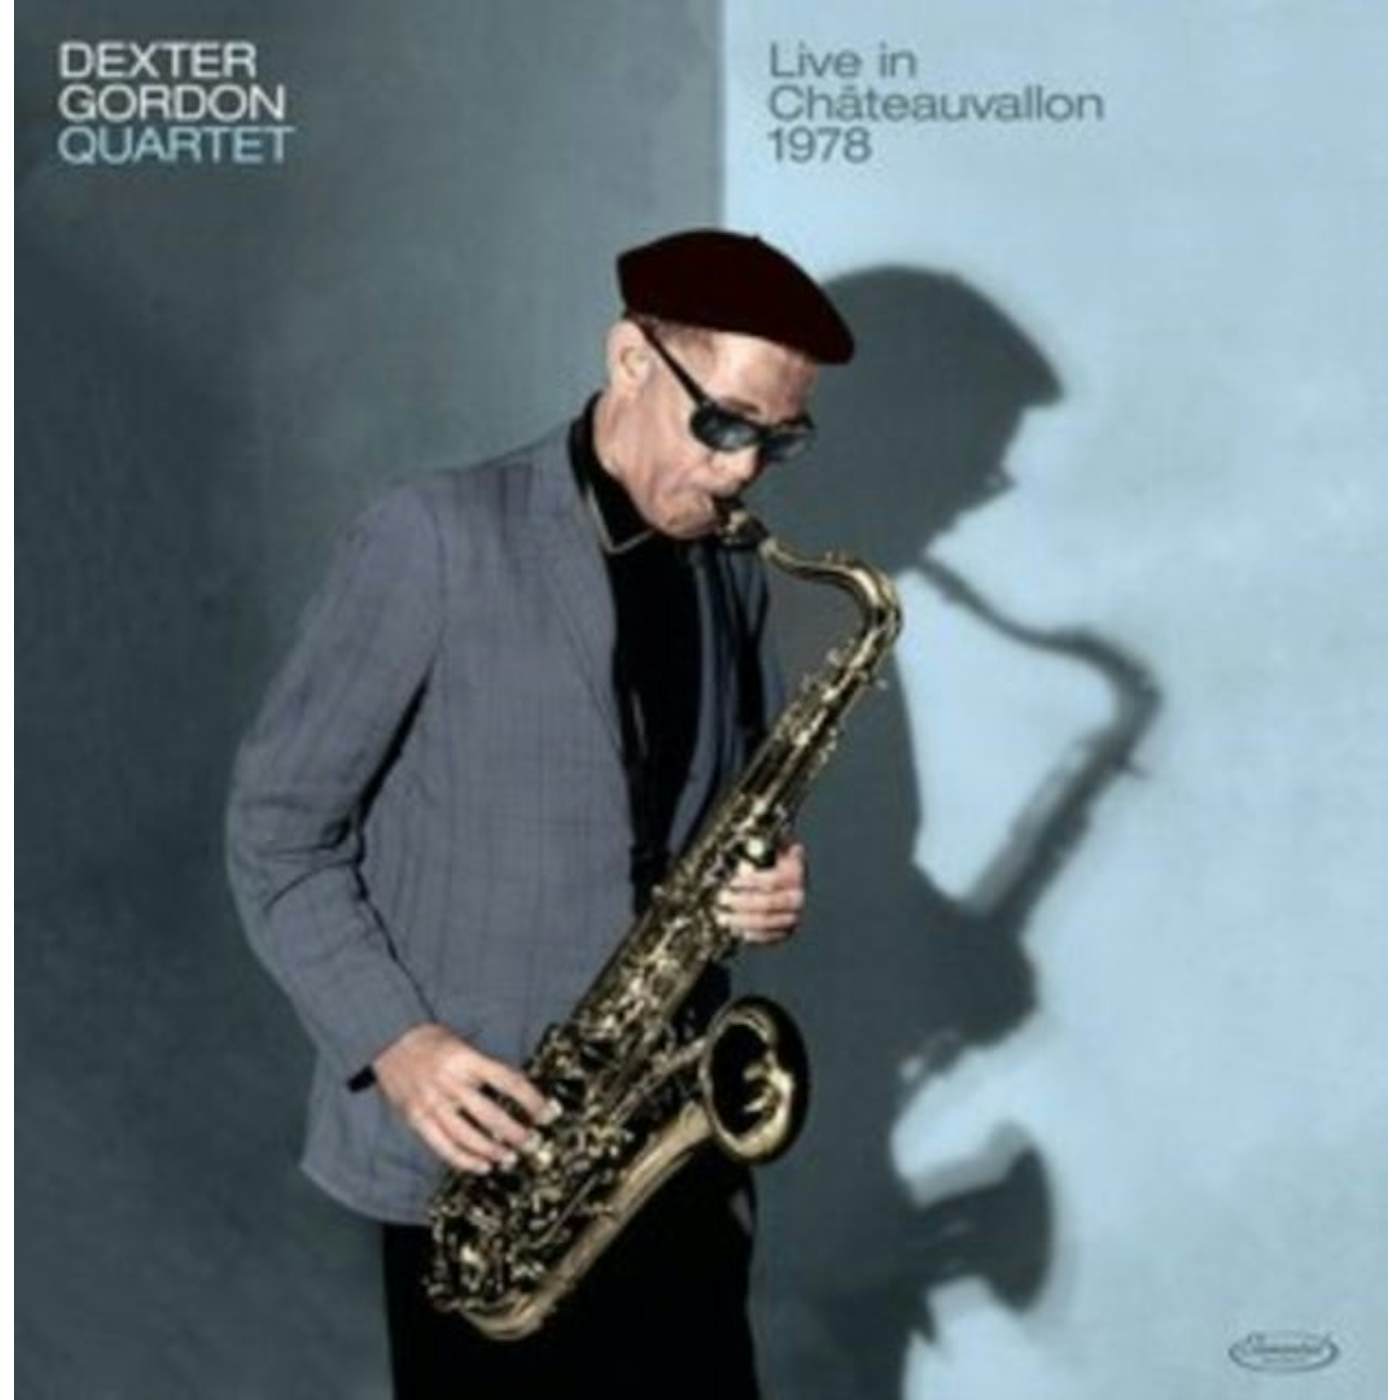 Dexter Gordon Quartet LP Vinyl Record - Live In Chateauvallon - 19 78 (Rsd 20. 20. )